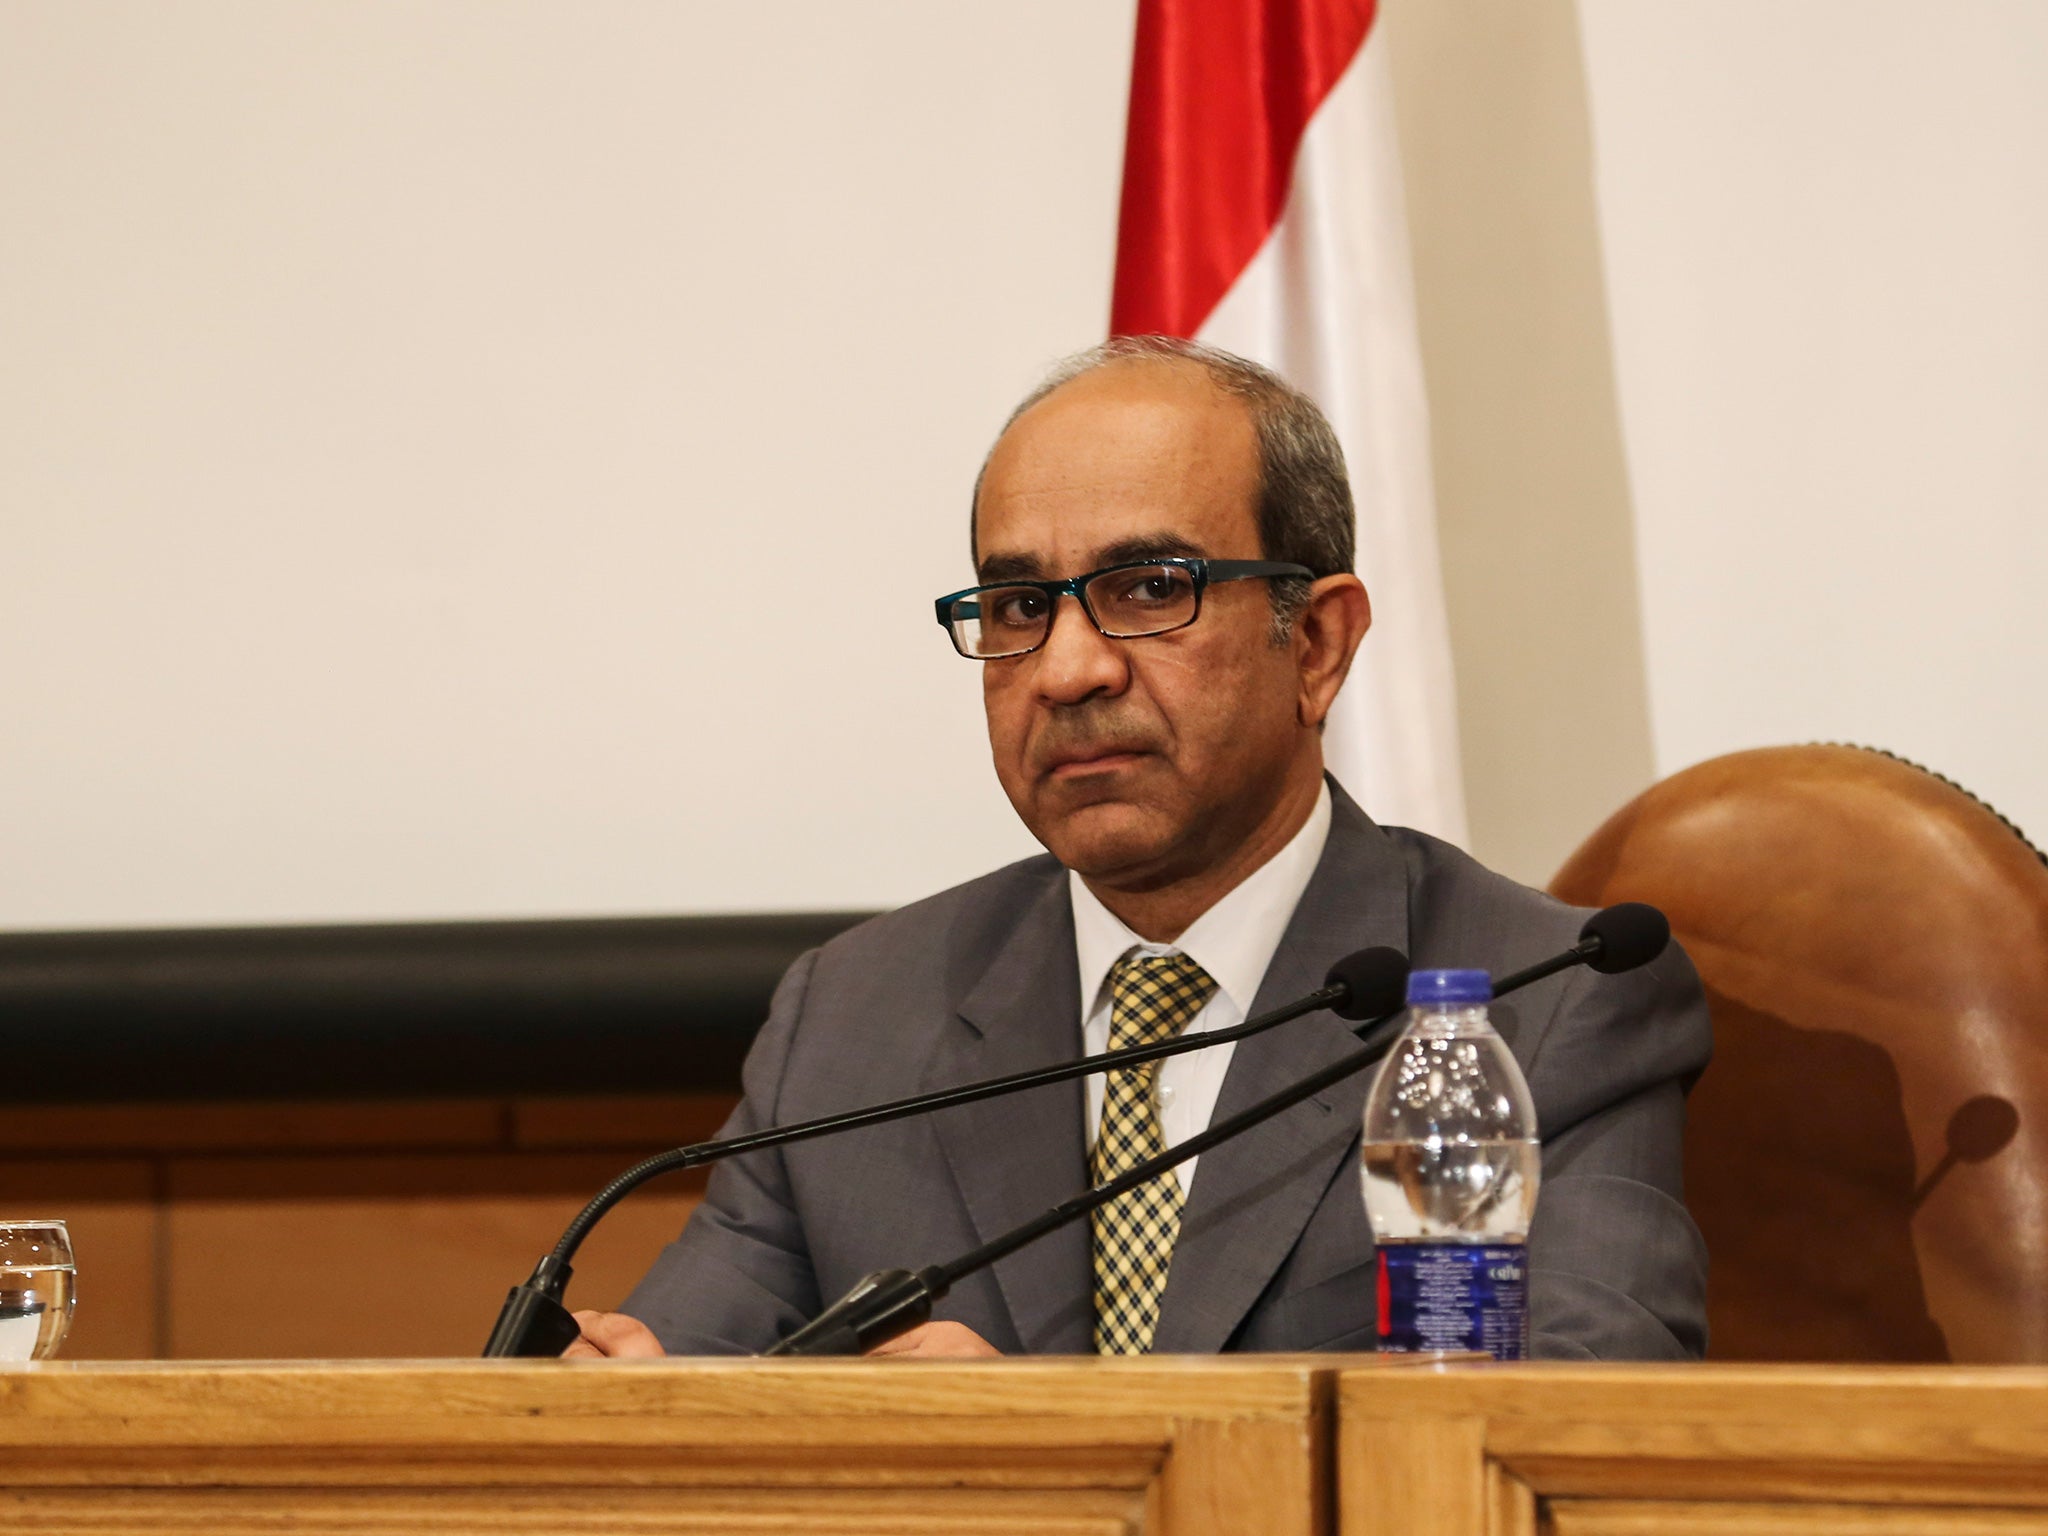 Ayman el-Muqadem, the head of the investigation team on the crash